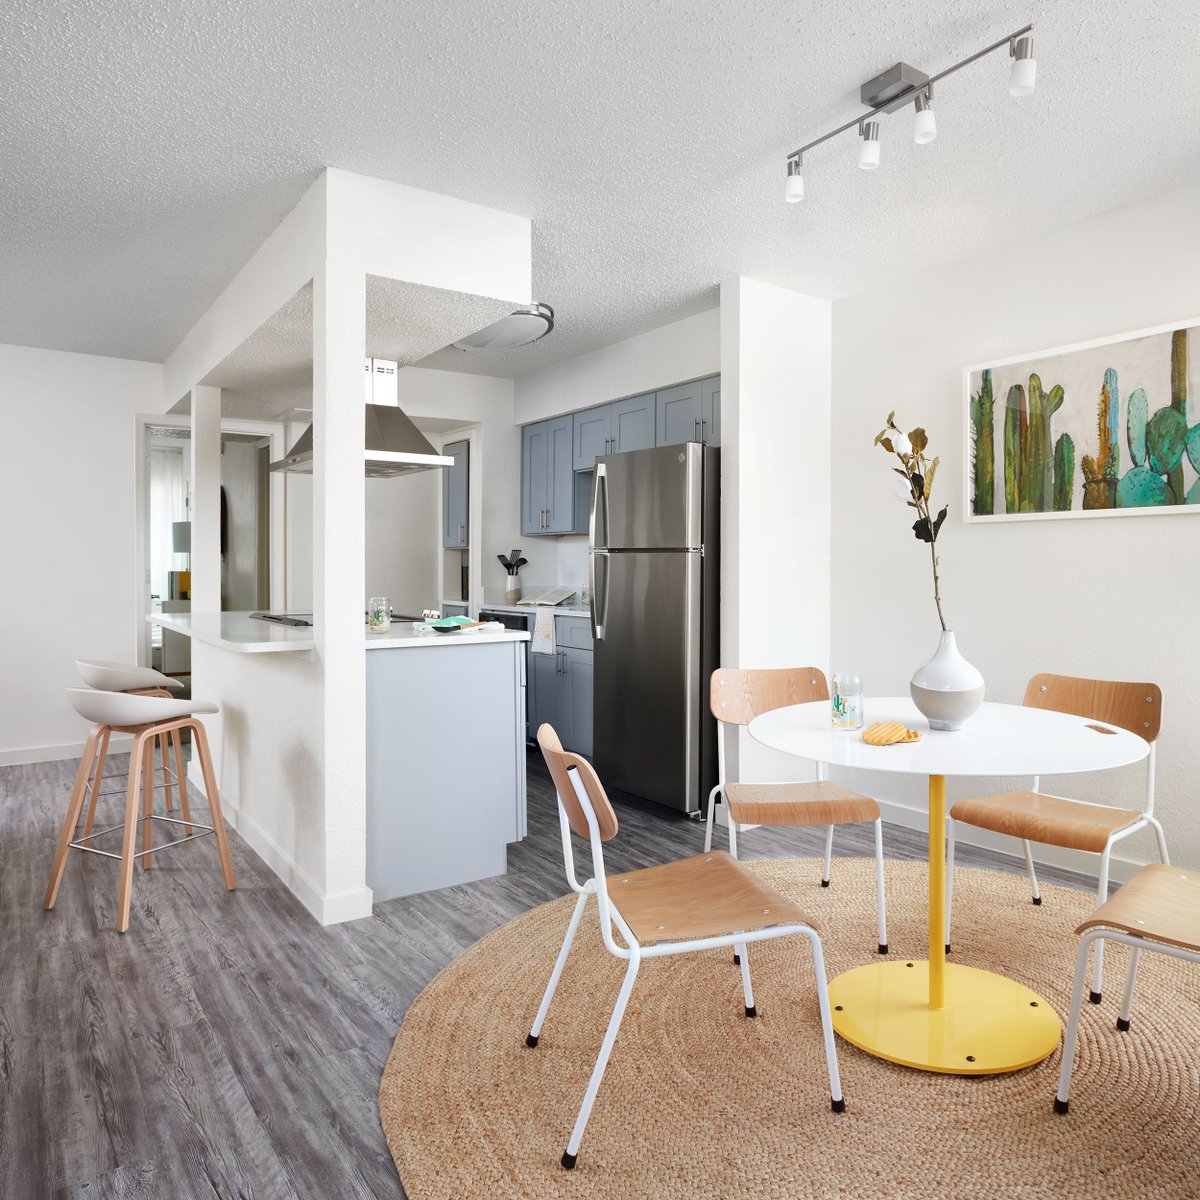 Firefly Dallas presents modern apartment homes with gorgeous living rooms and kitchens! 
.
.
.
.
.
#kitchendesign #sittingroom #snug #pocketdoors #interiordesign #dreamhome #dreamkitchen #houseandgarden #homesandgardens #adstyle #architecture #designinspo #kitcheninspiration  ...